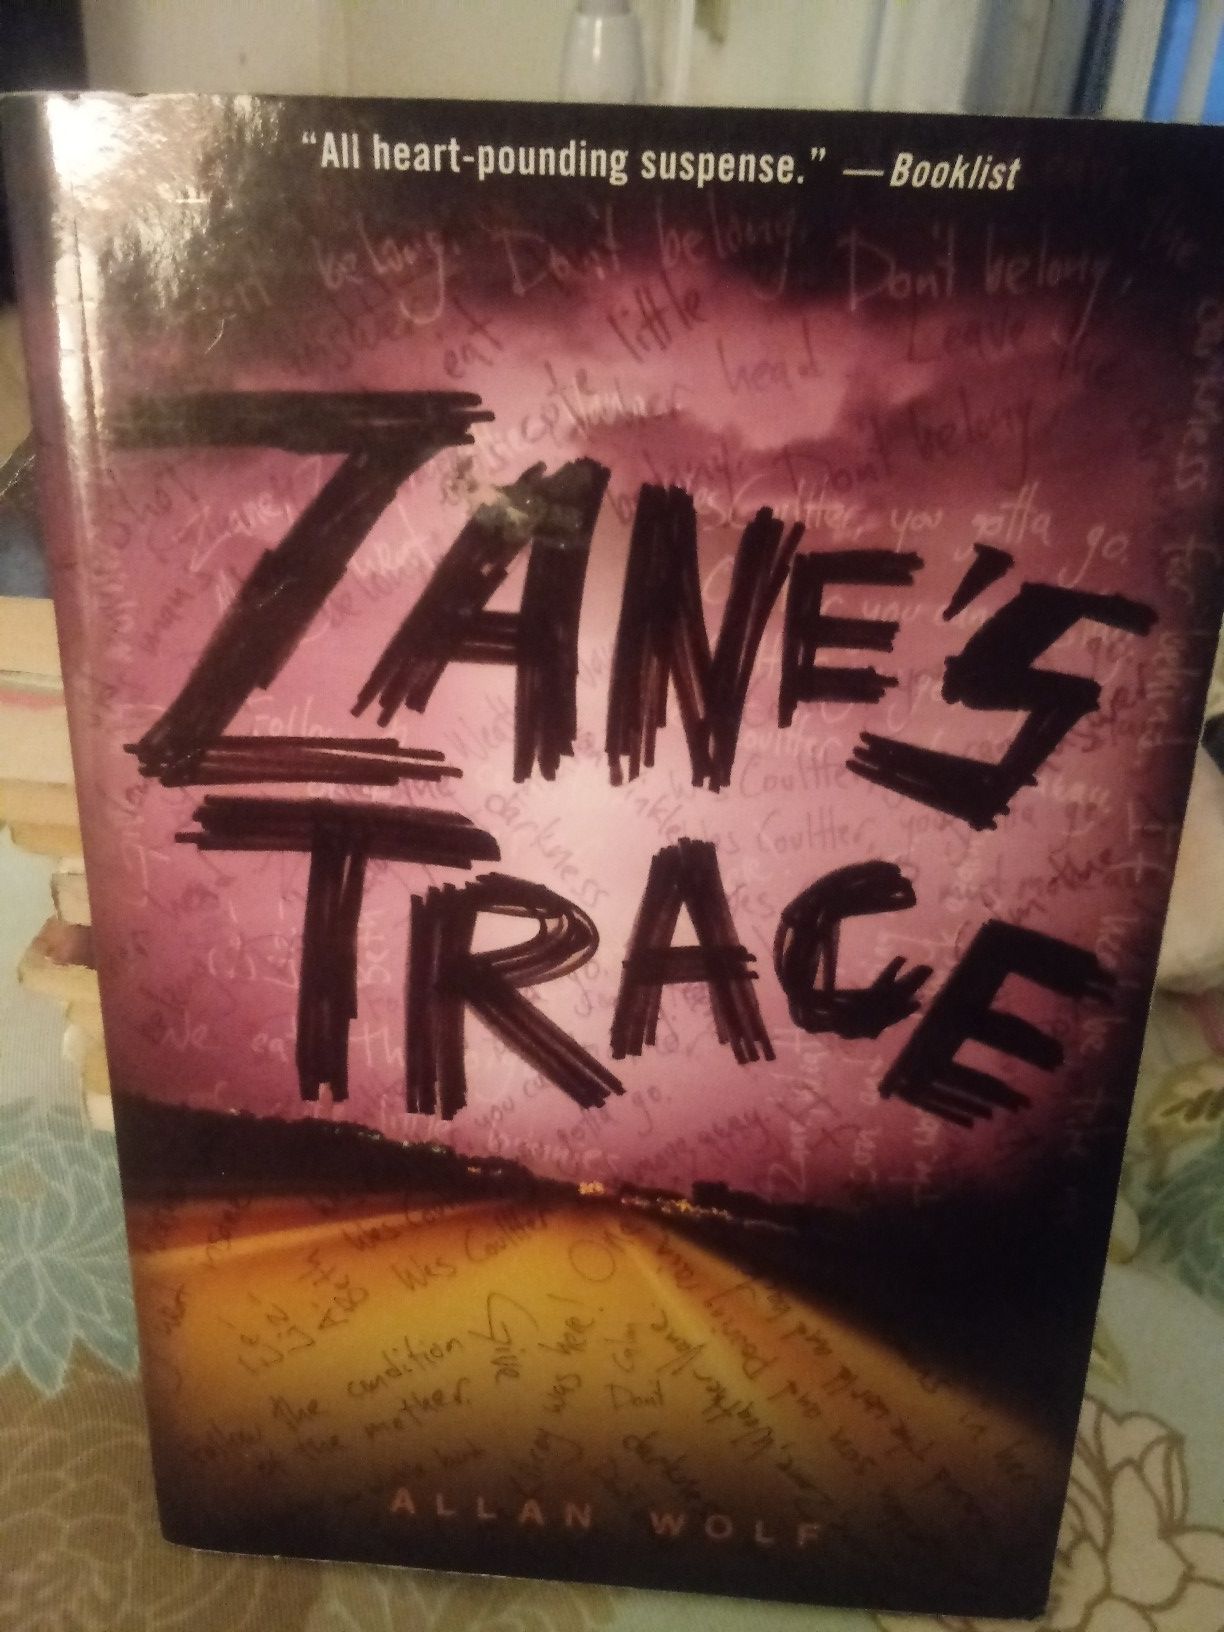 Zane's TRACE